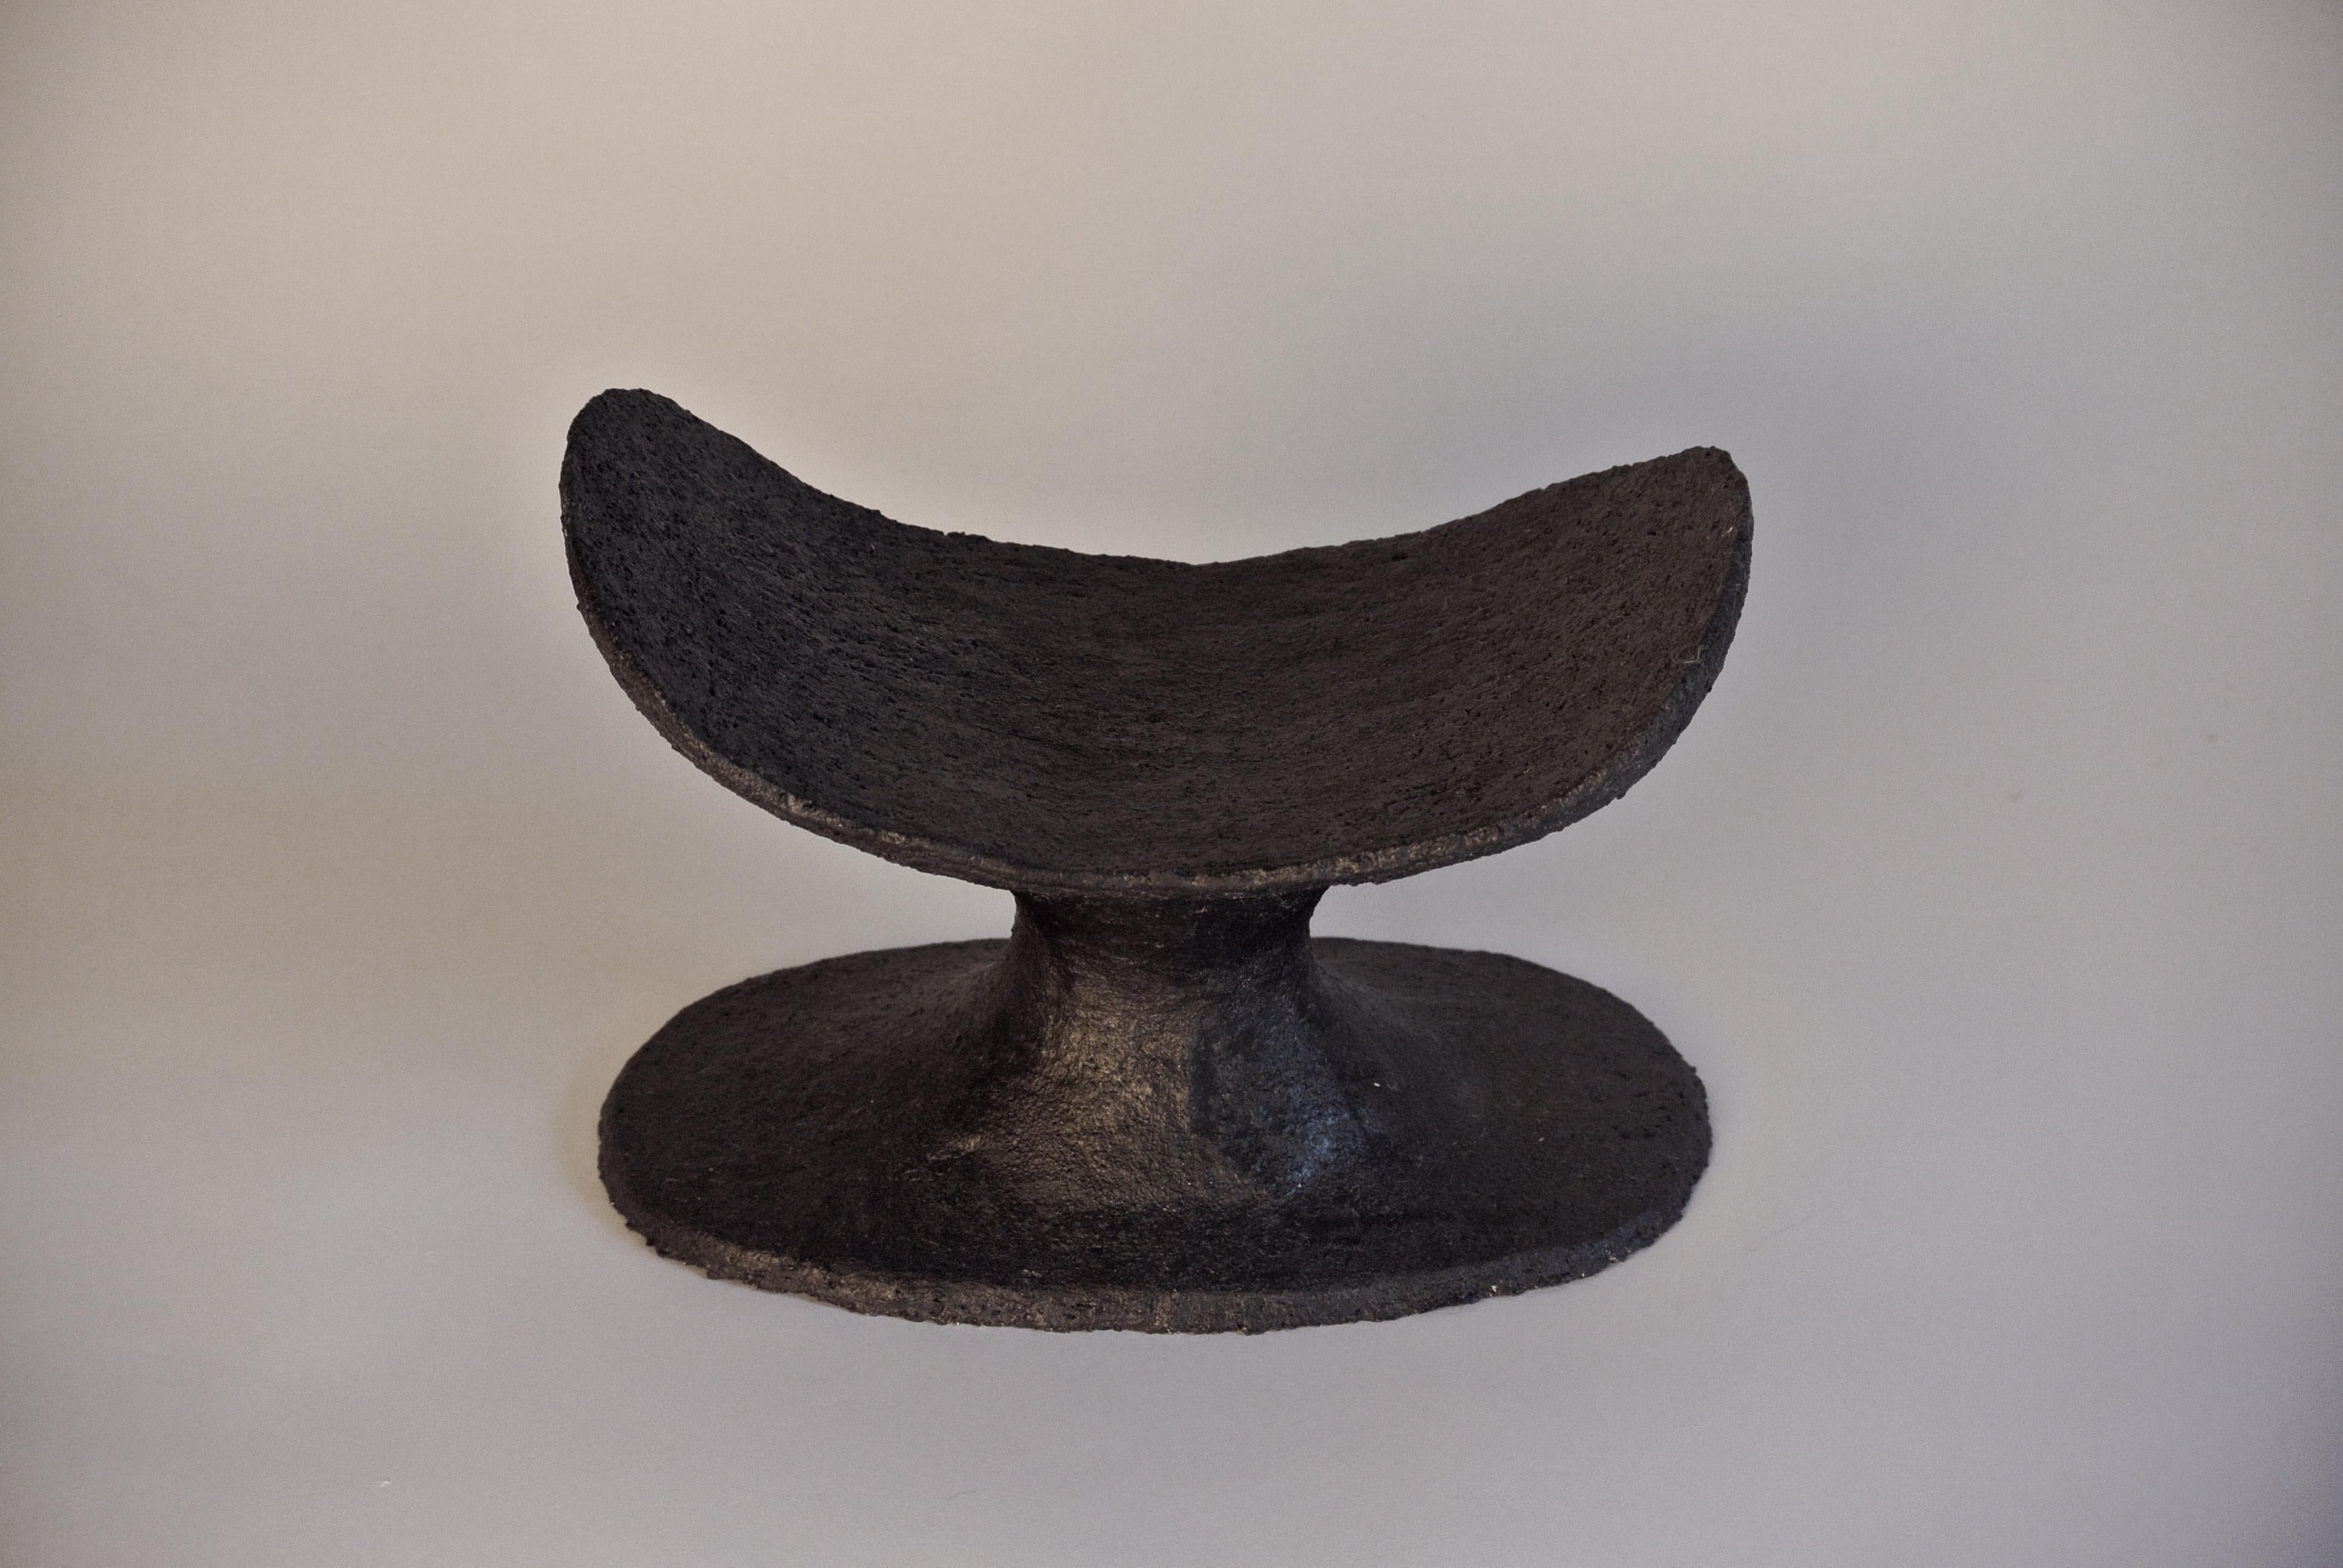 Black rough stoneware head rest with chamotte and black metallic glaze by Danish artist Christine Roland.